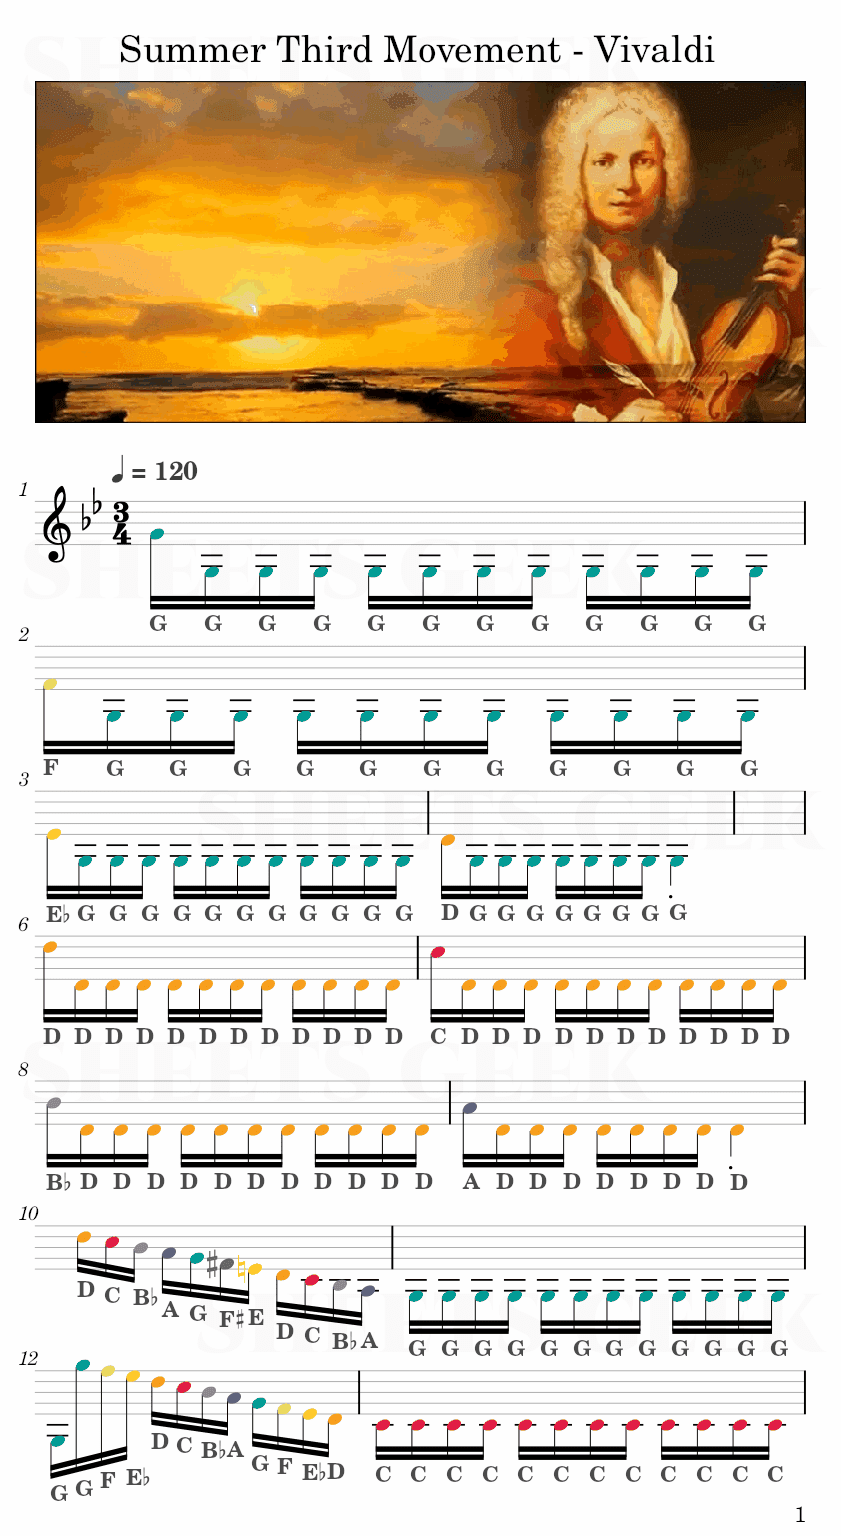 Summer Third Movement - Vivaldi Easy Sheet Music Free for piano, keyboard, flute, violin, sax, cello page 1